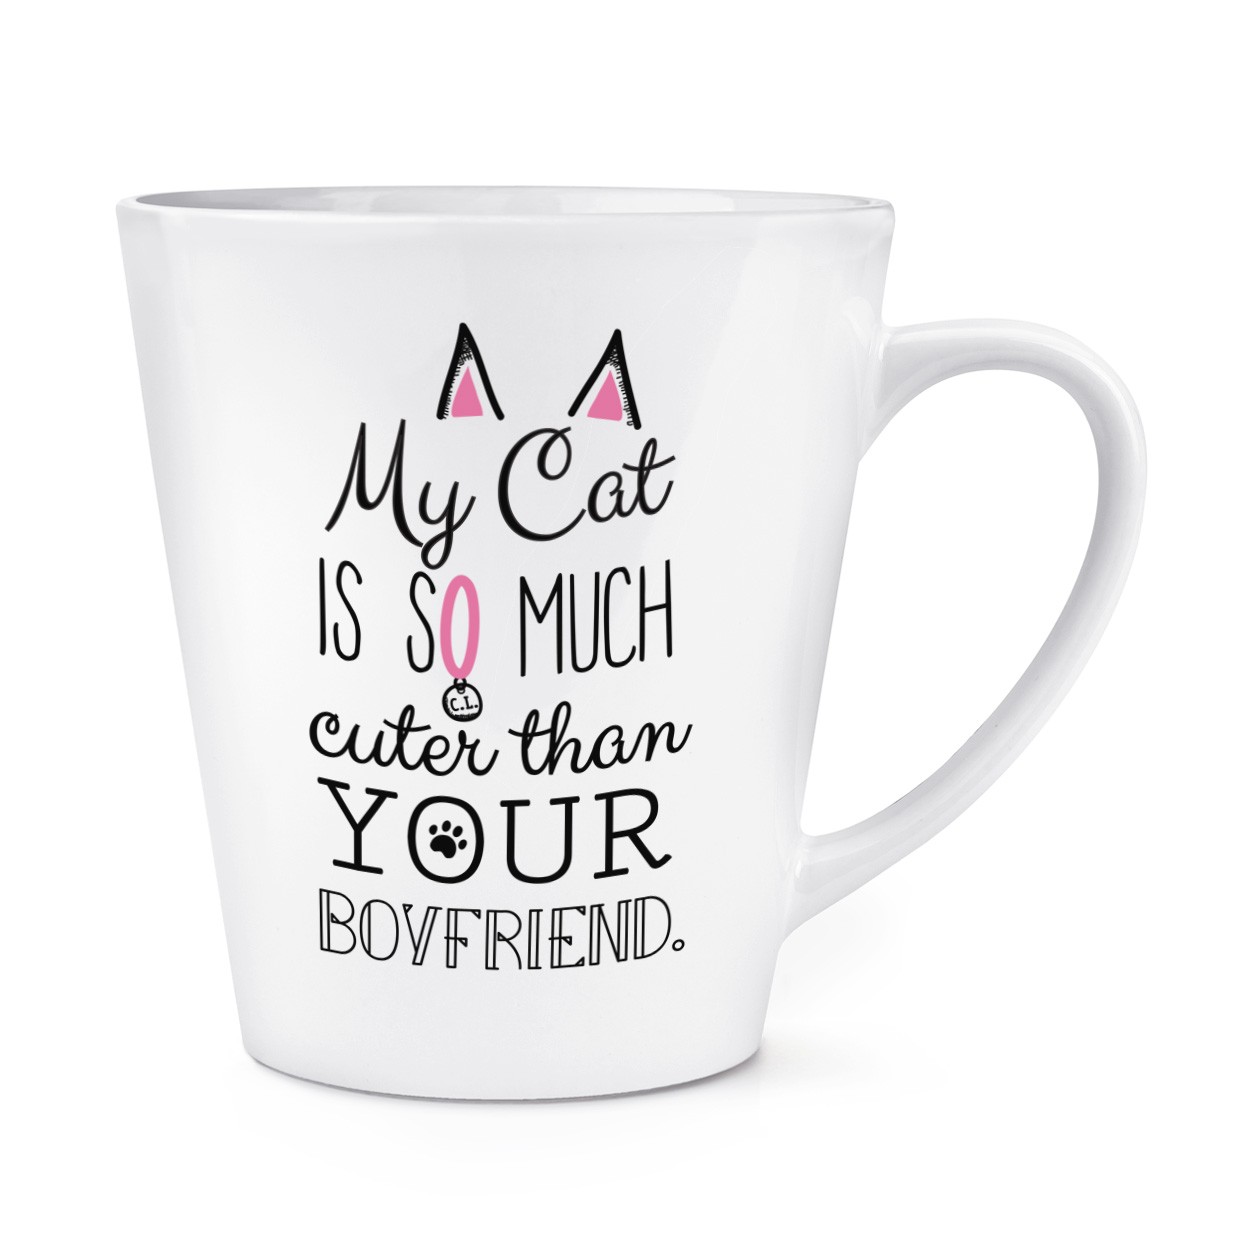 My Cat Is So Much Cuter Than Your Boyfriend 12oz Latte Mug Cup